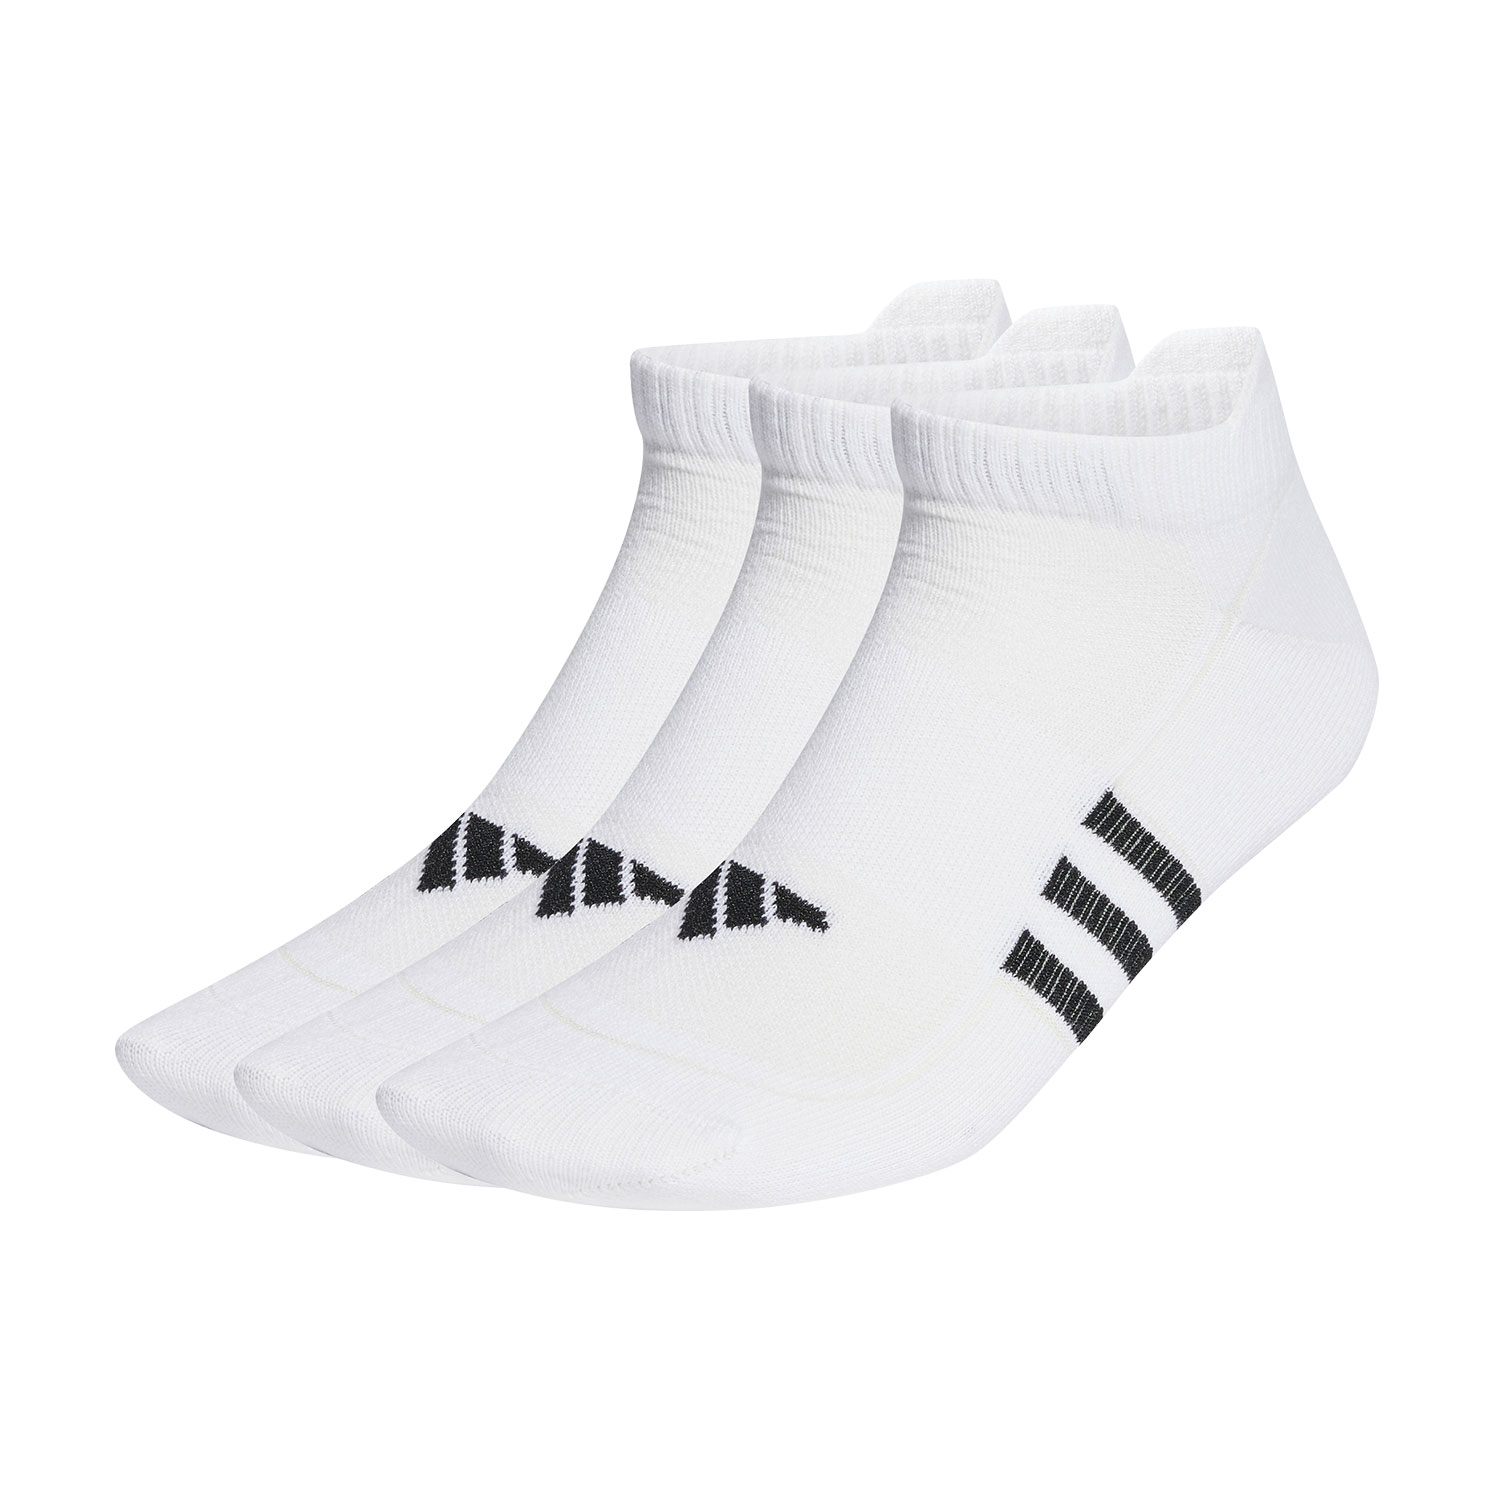 adidas Performance Light x 3 Running Socks - White